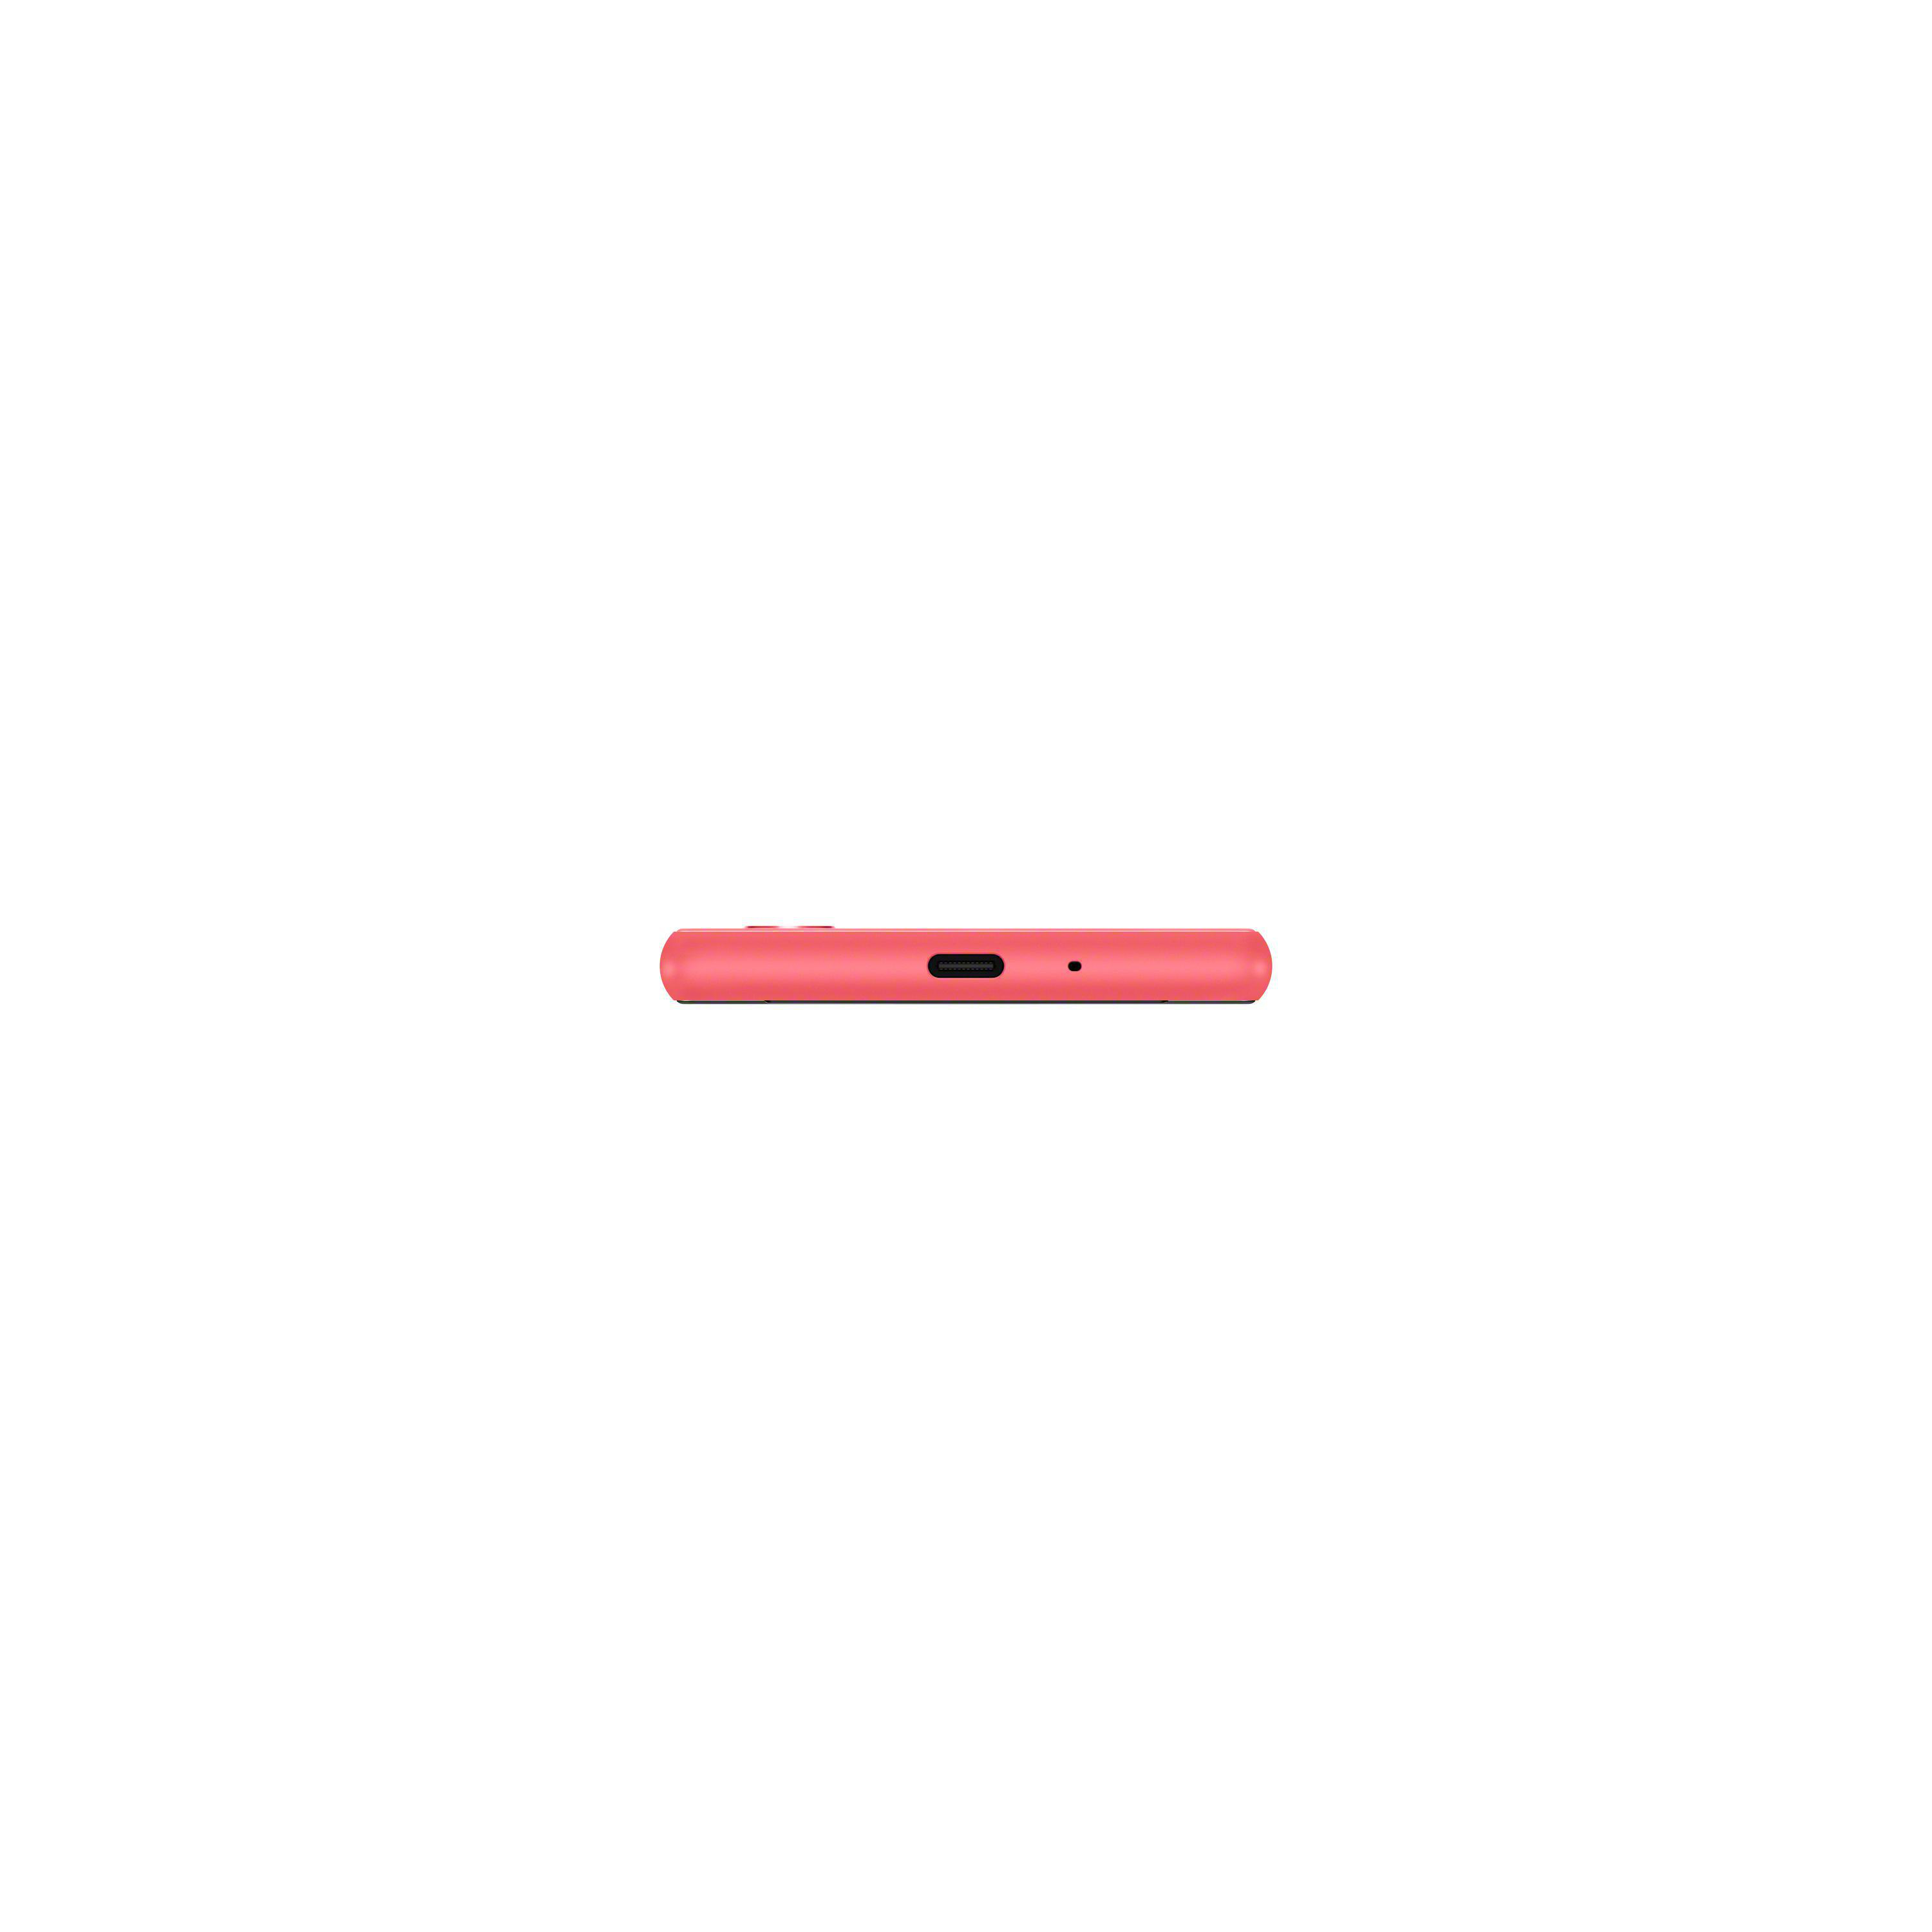 SONY Xperia 10 SIM GB Dual Pink 5G 21:9 III 128 Display